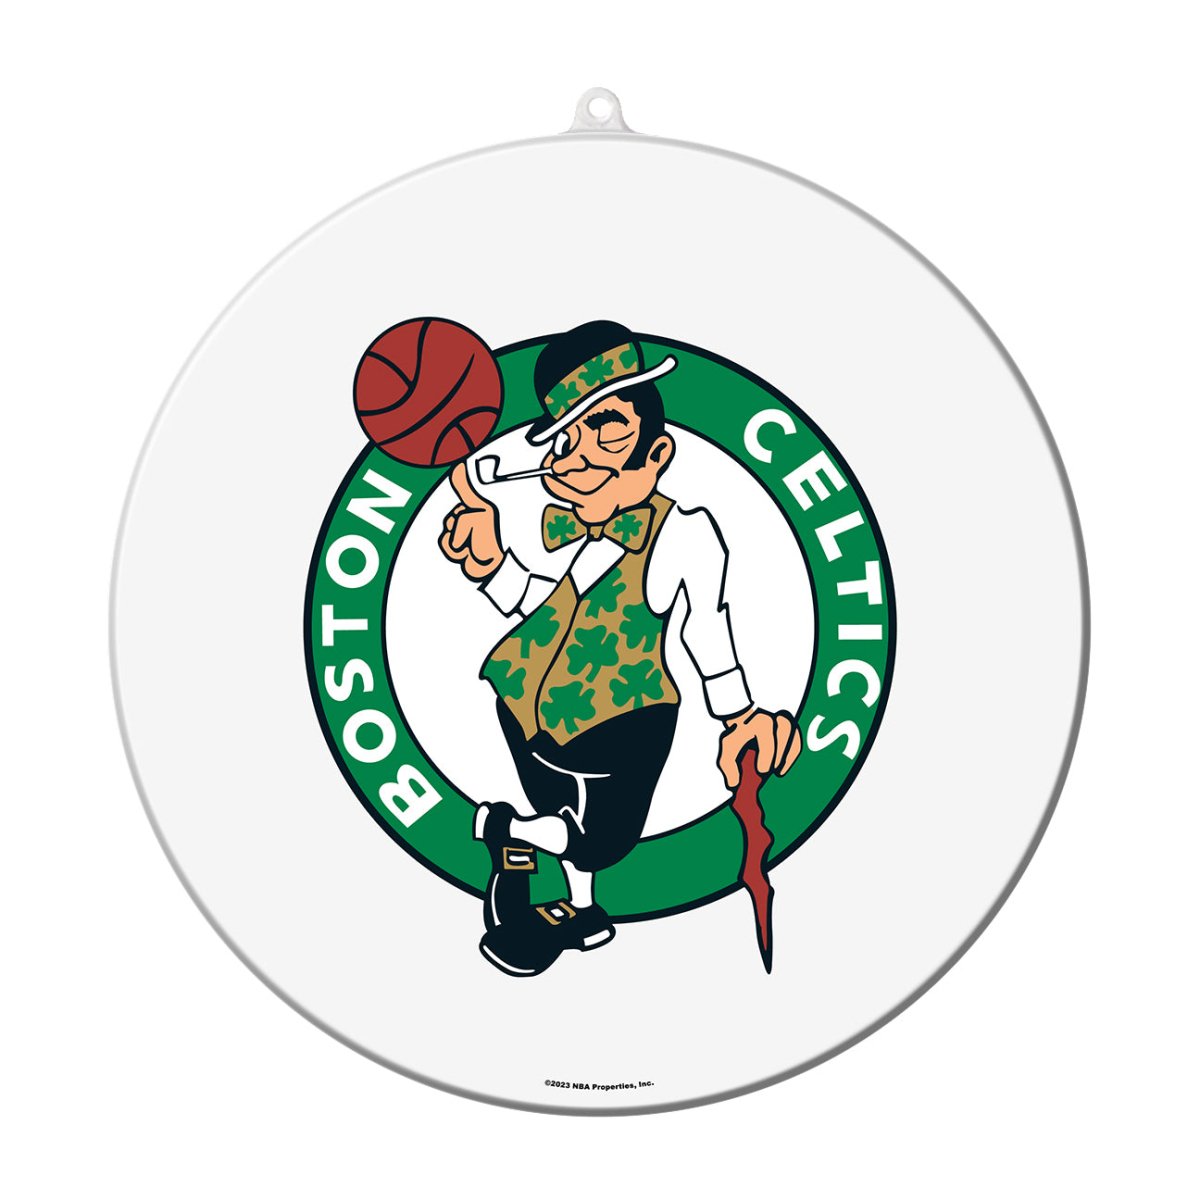 Boston Celtics: Sun Catcher Ornament 4- Pack